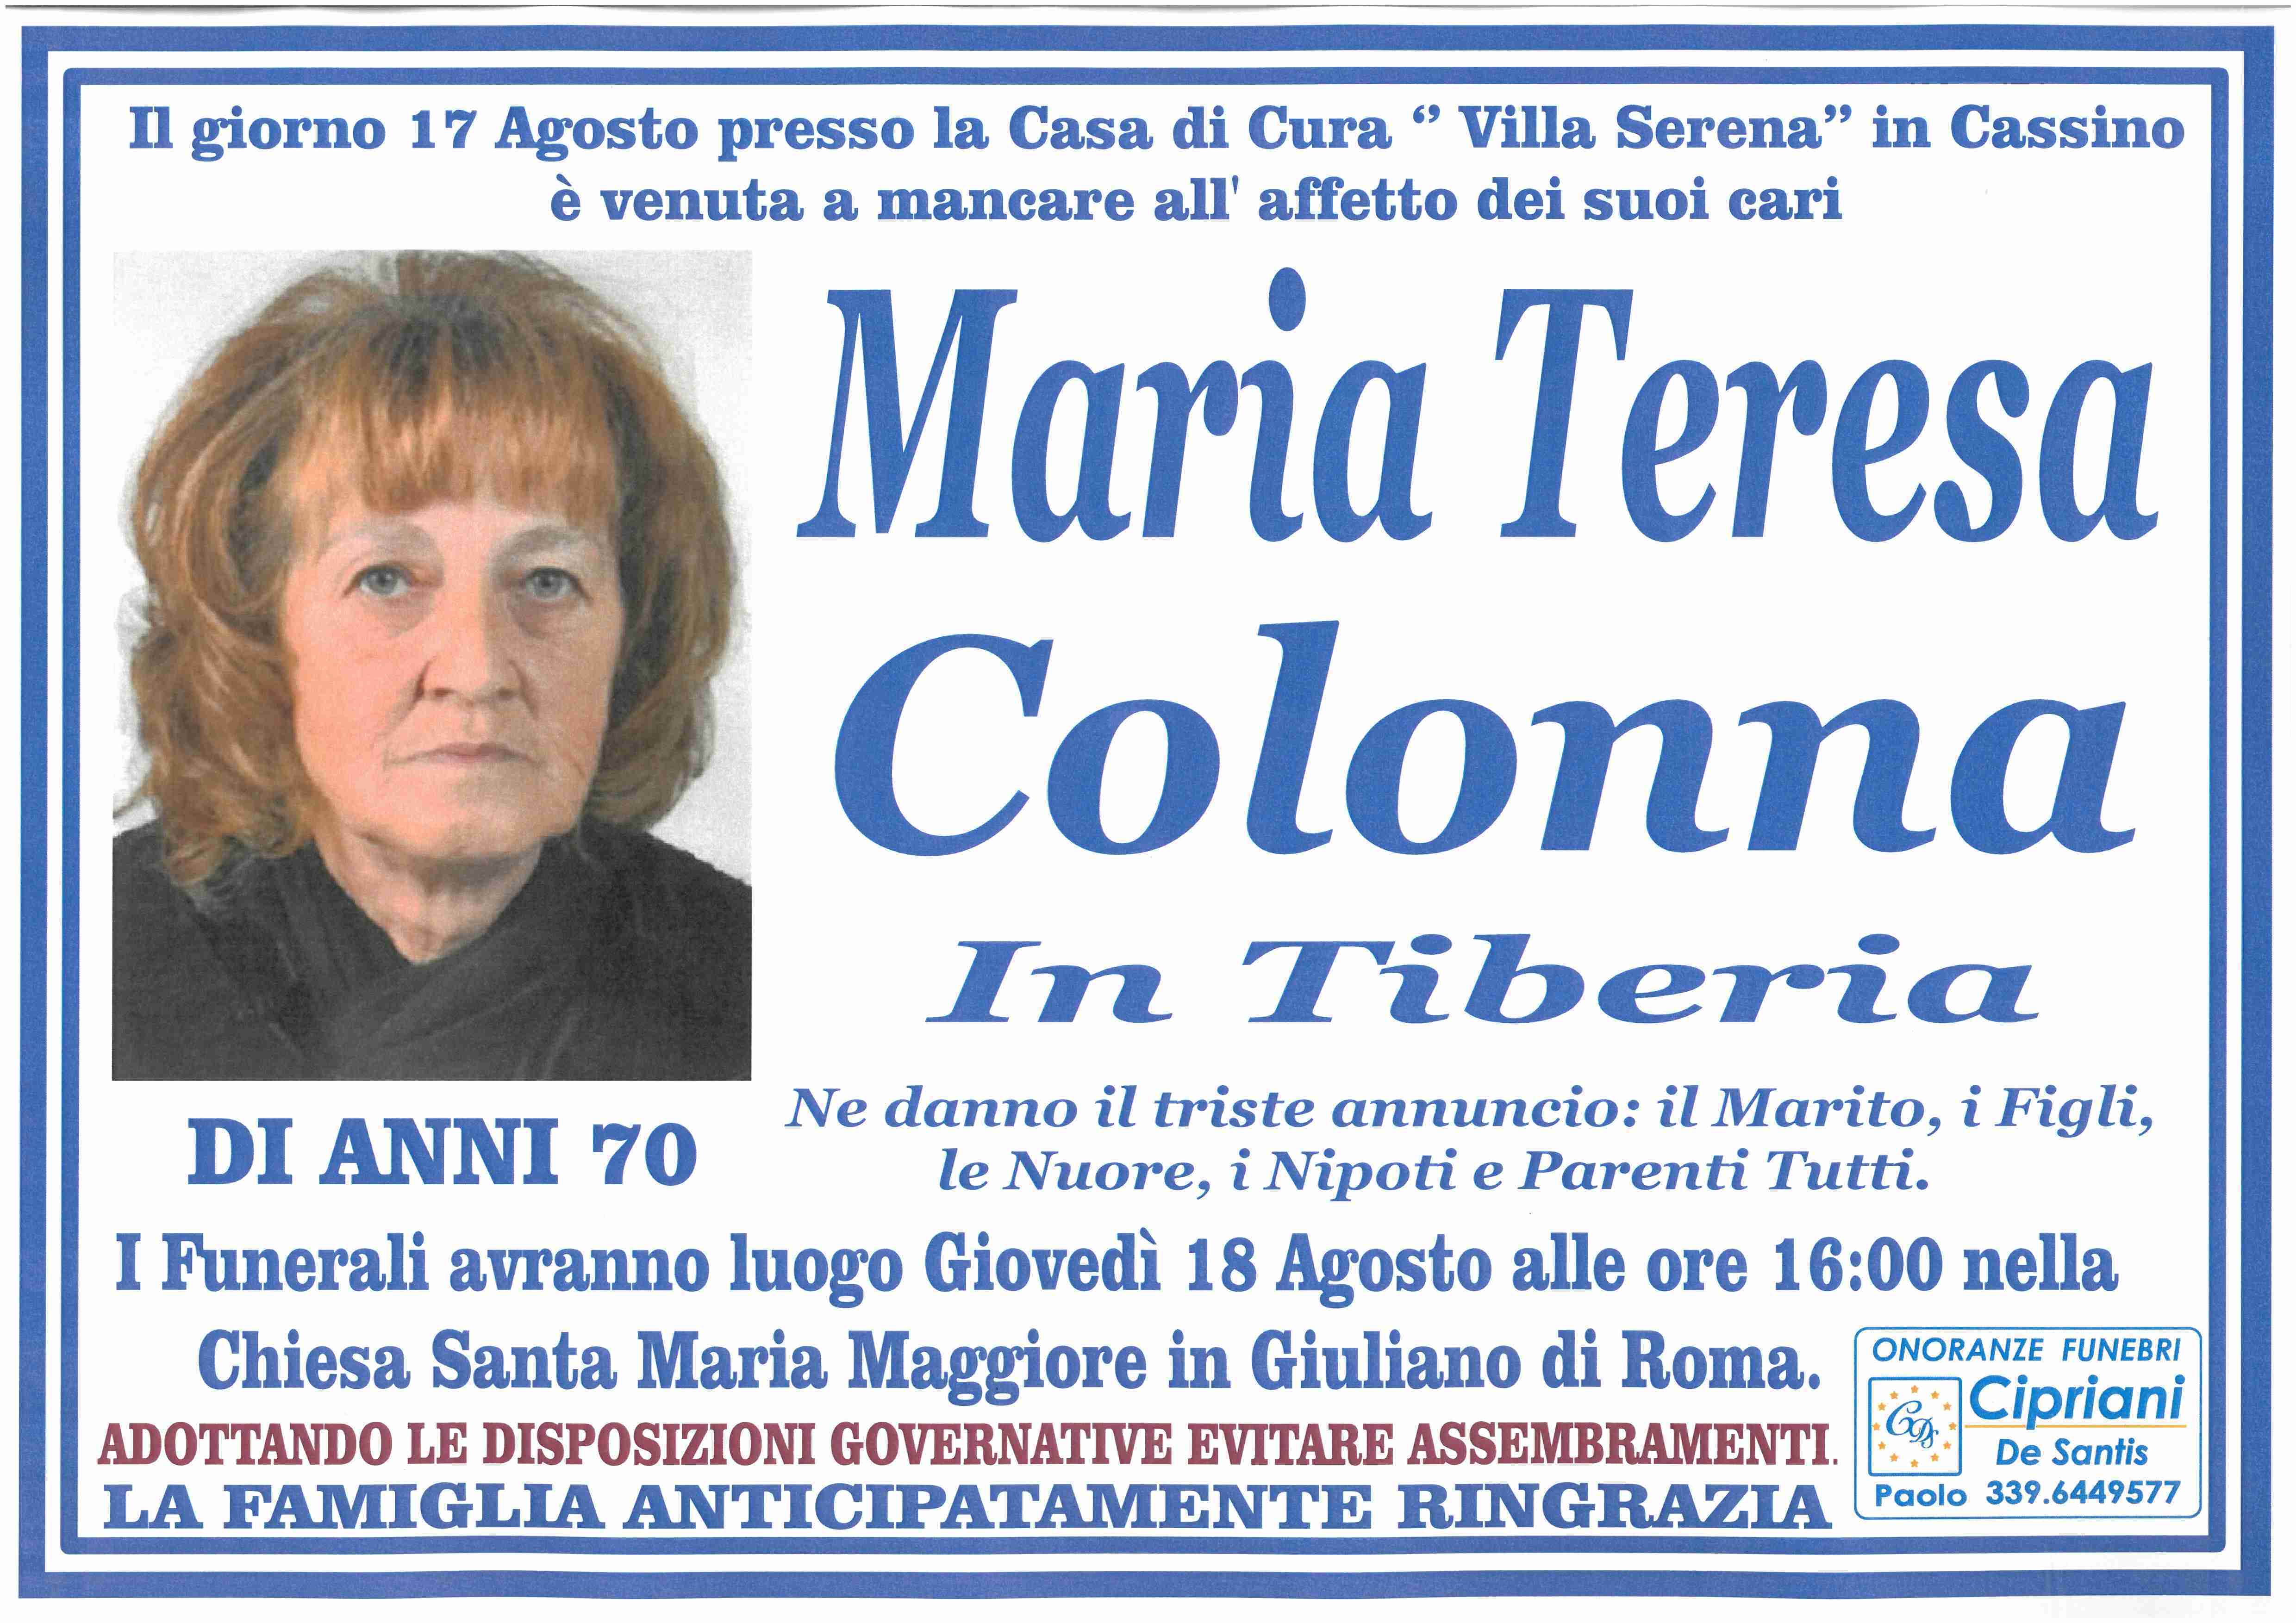 Maria Teresa Colonna